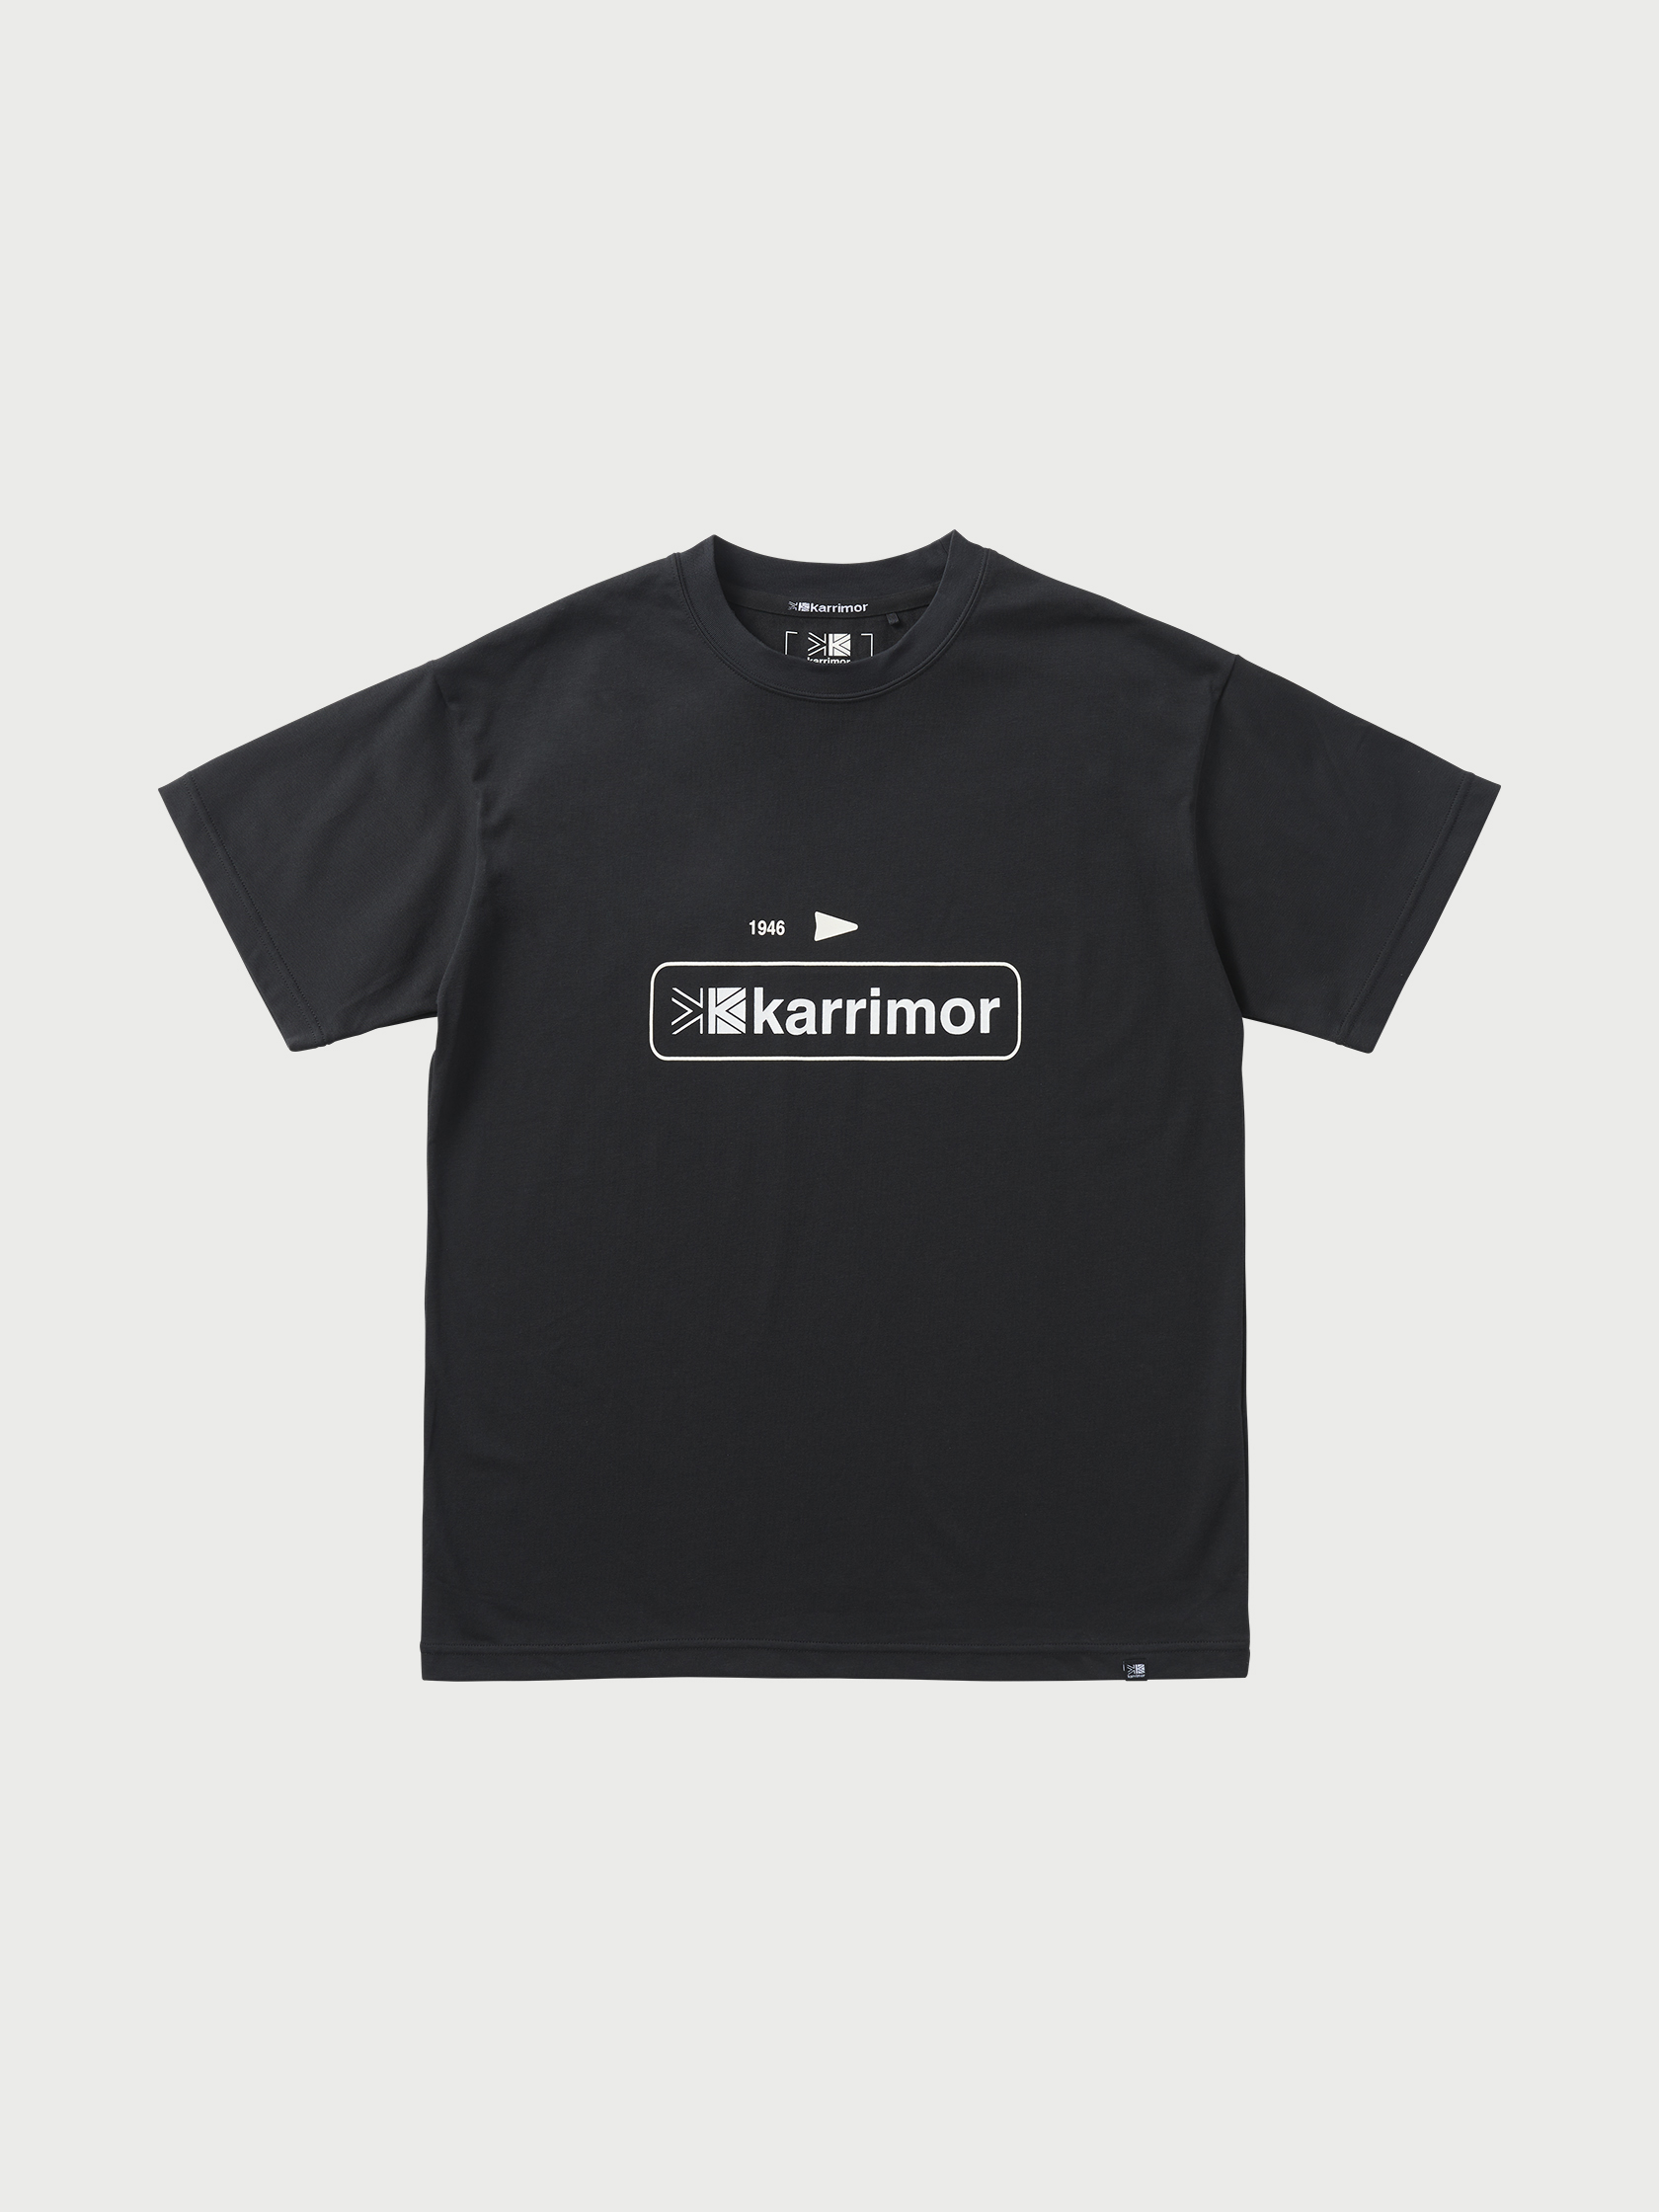 classic logo S/S T | karrimor カリマー | リュックサック